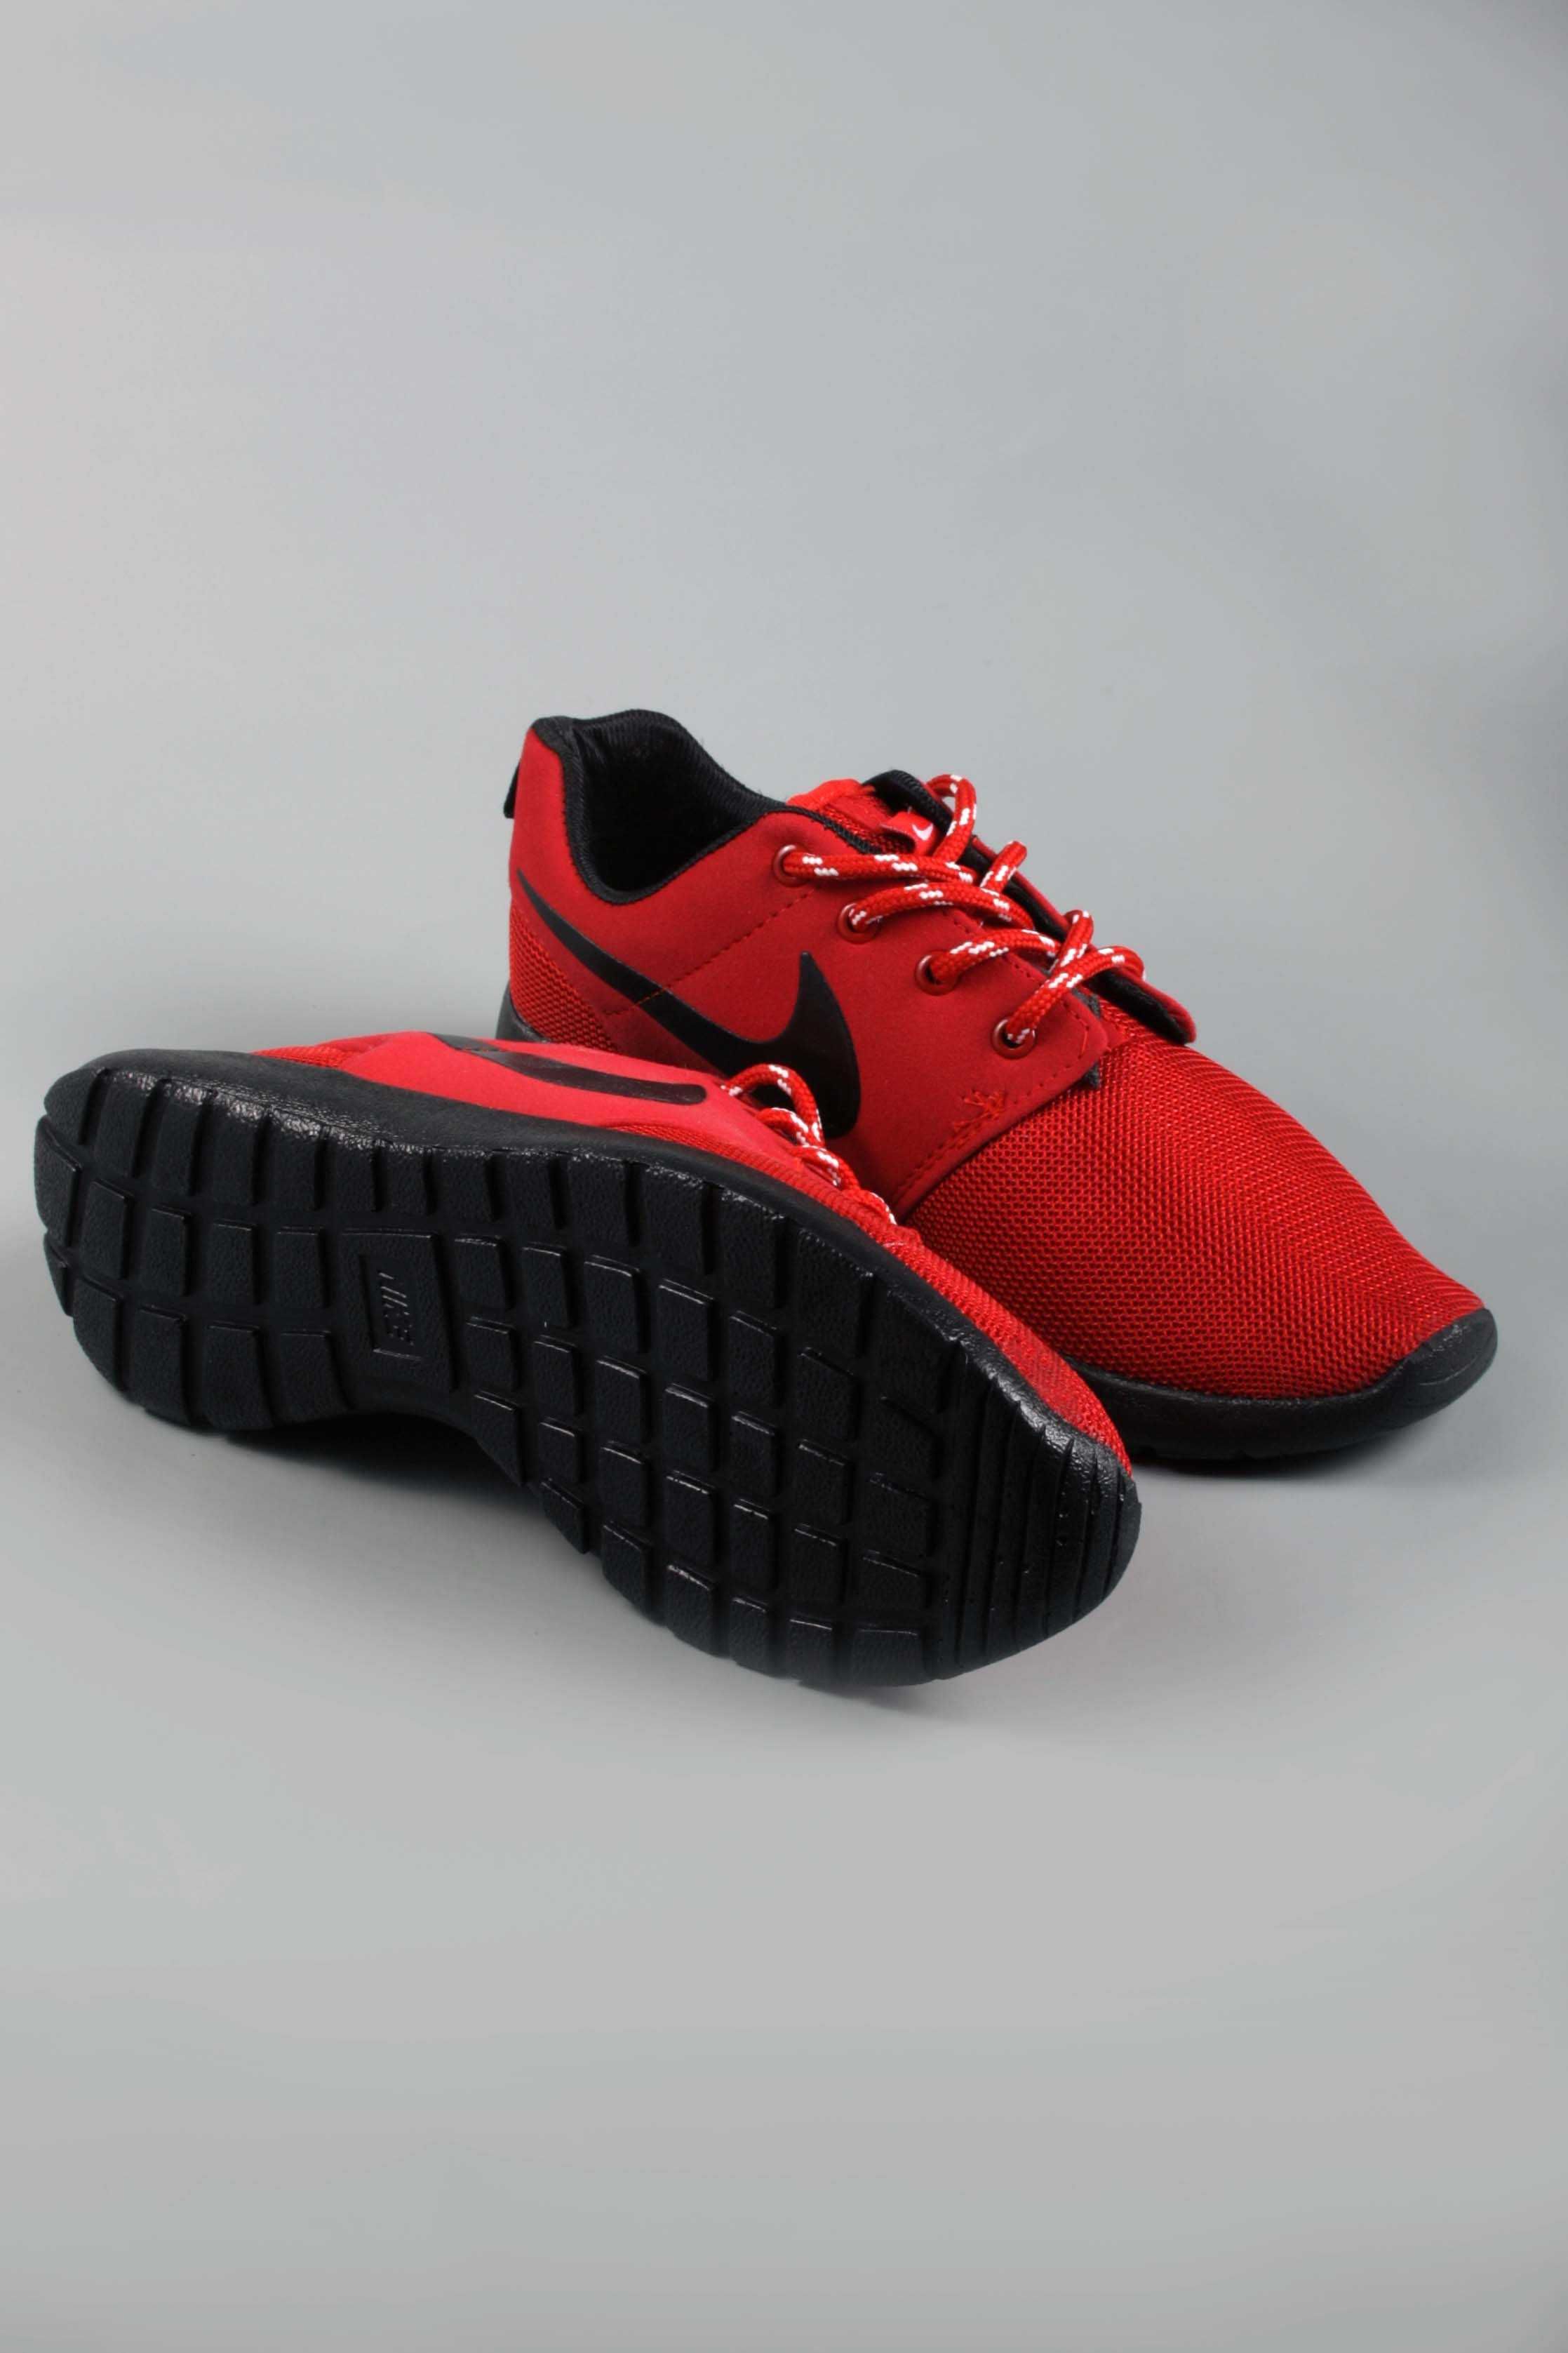 Кроссовки Nike Roshe Run красные